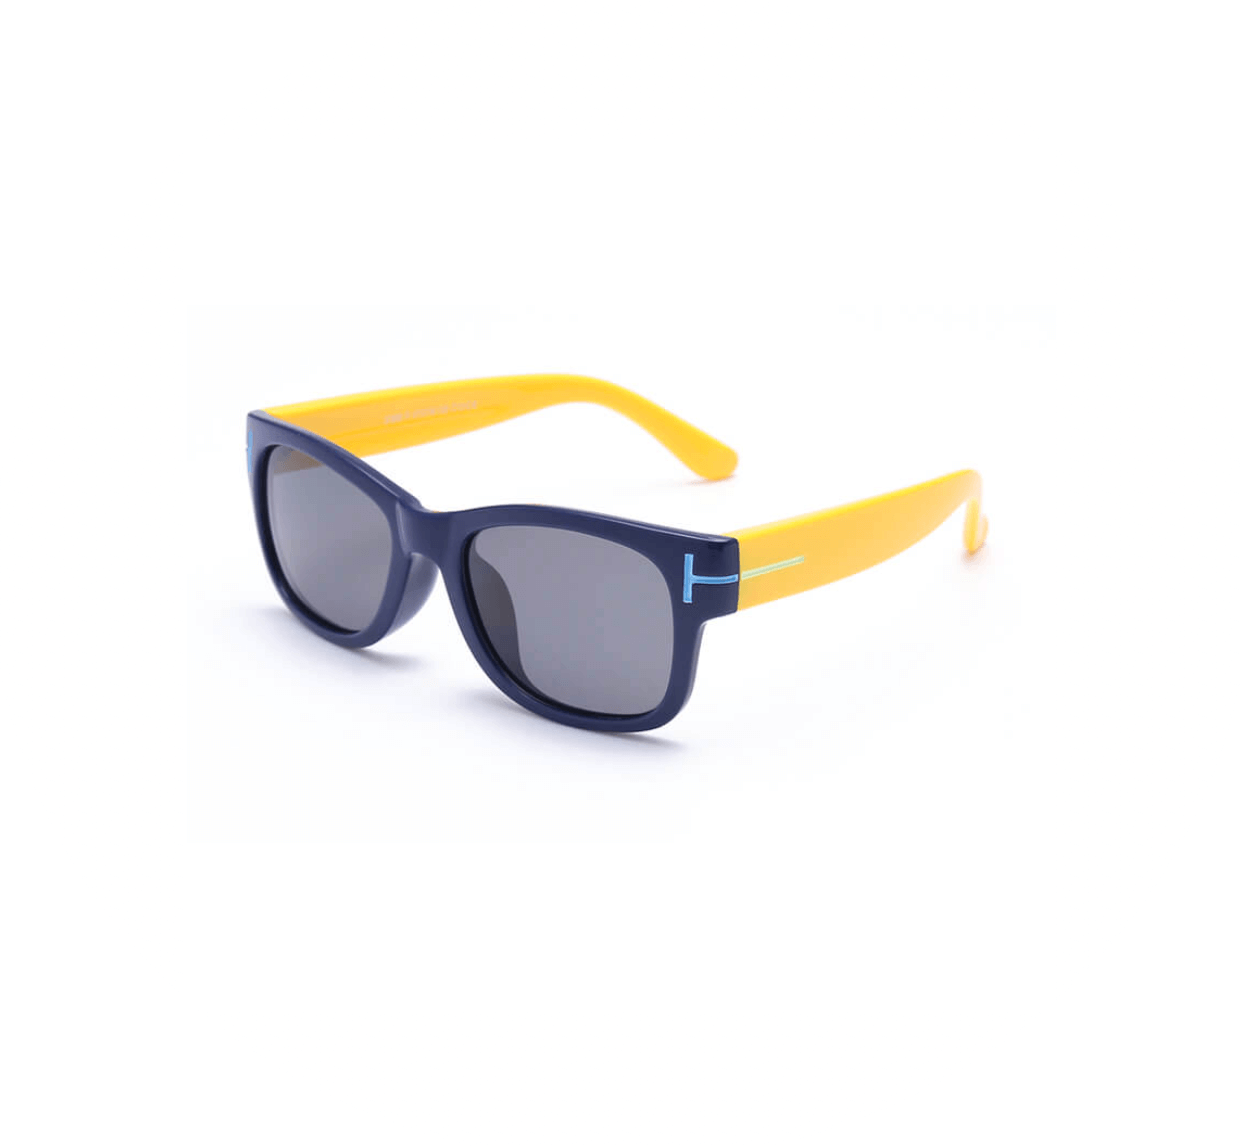 polarized wholesale sunglasses, blue square childrens sunglasses, polarized sunglasses China, bulk polarized sunglasses, sunglasses supplier